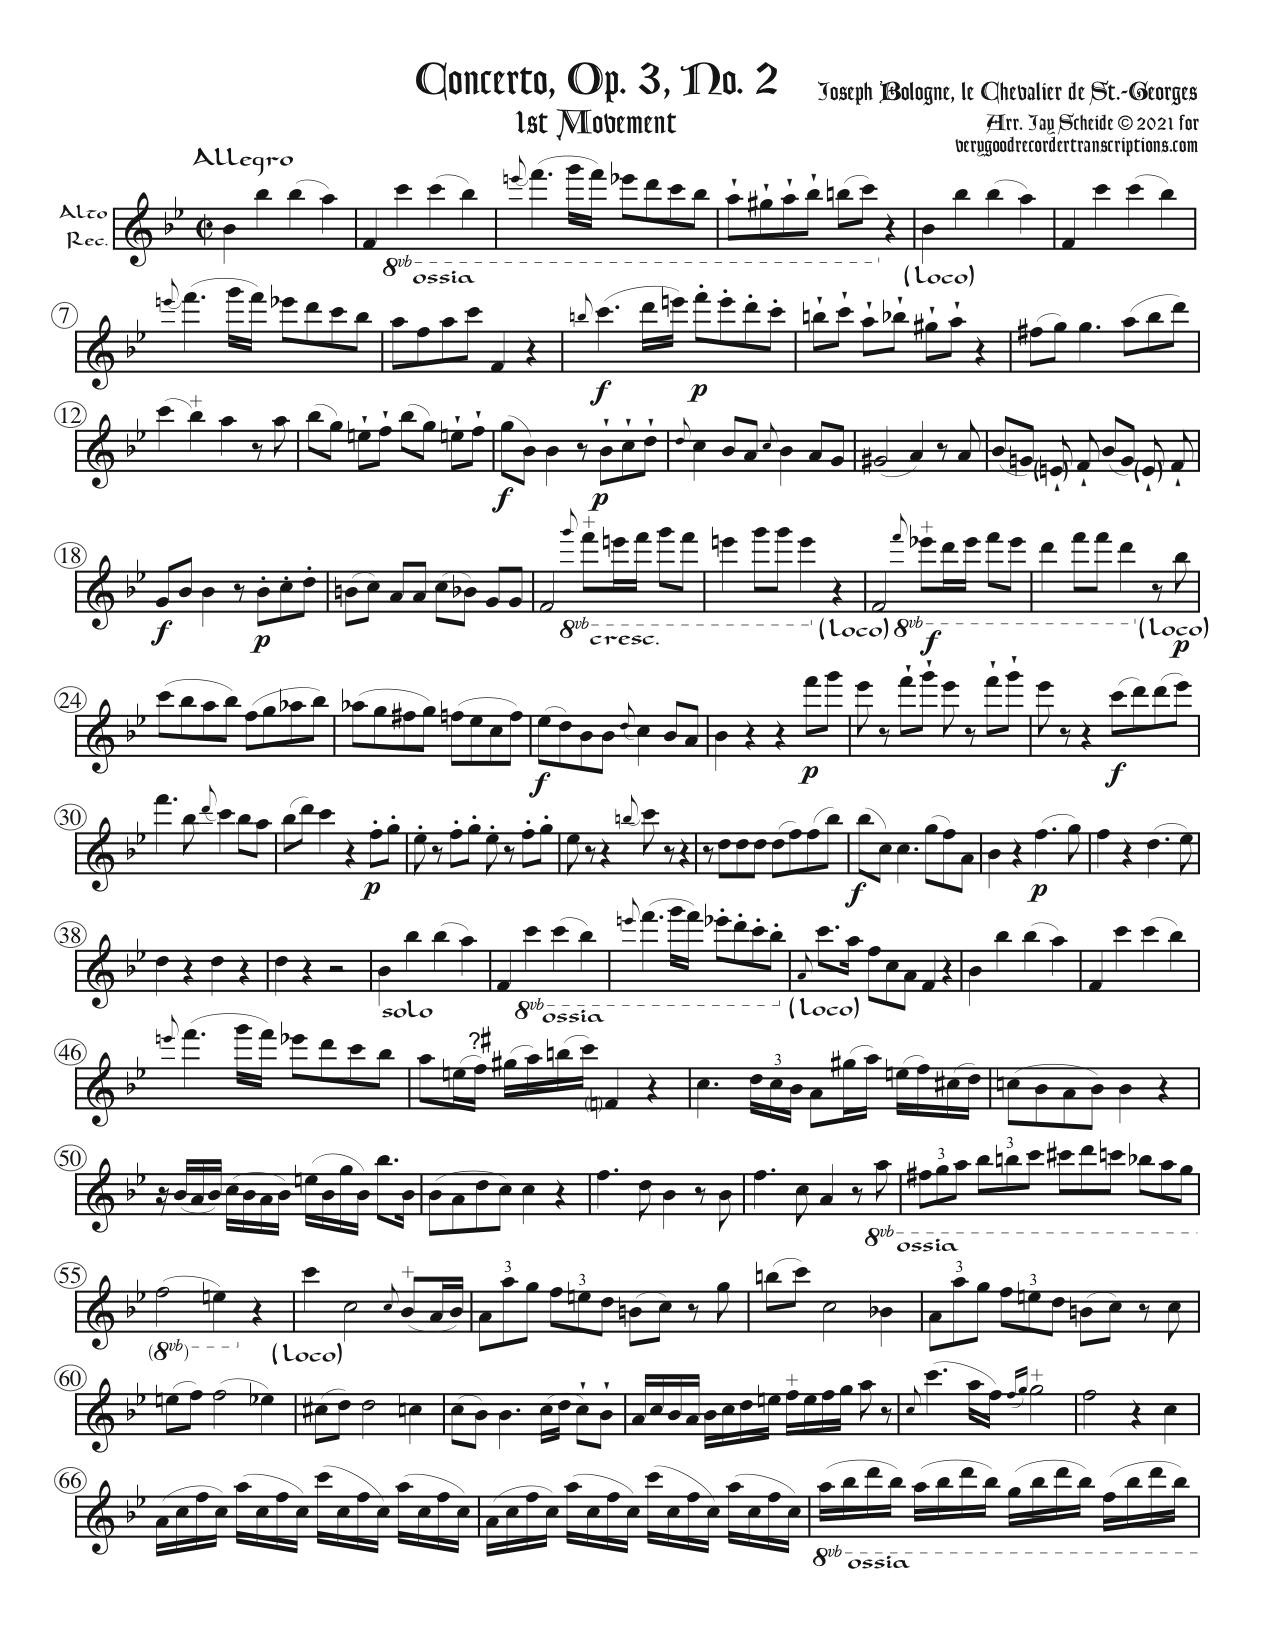 Concerto, Op. 3 No. 2, versions in Bb major and C